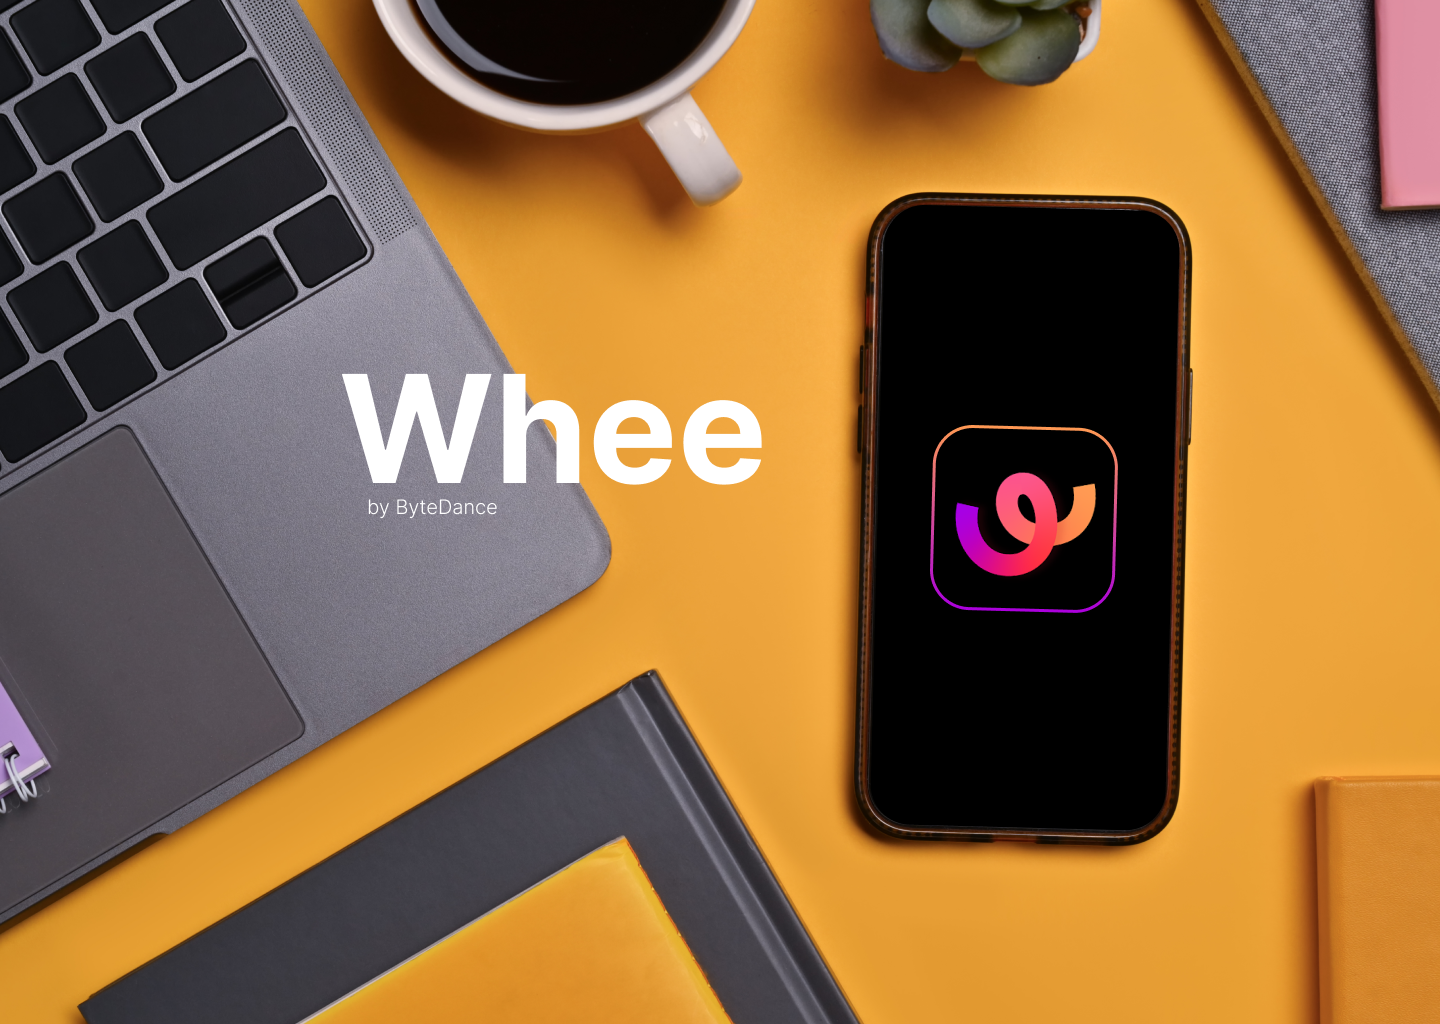 Whee: O novo concorrente do Instagram da ByteDance